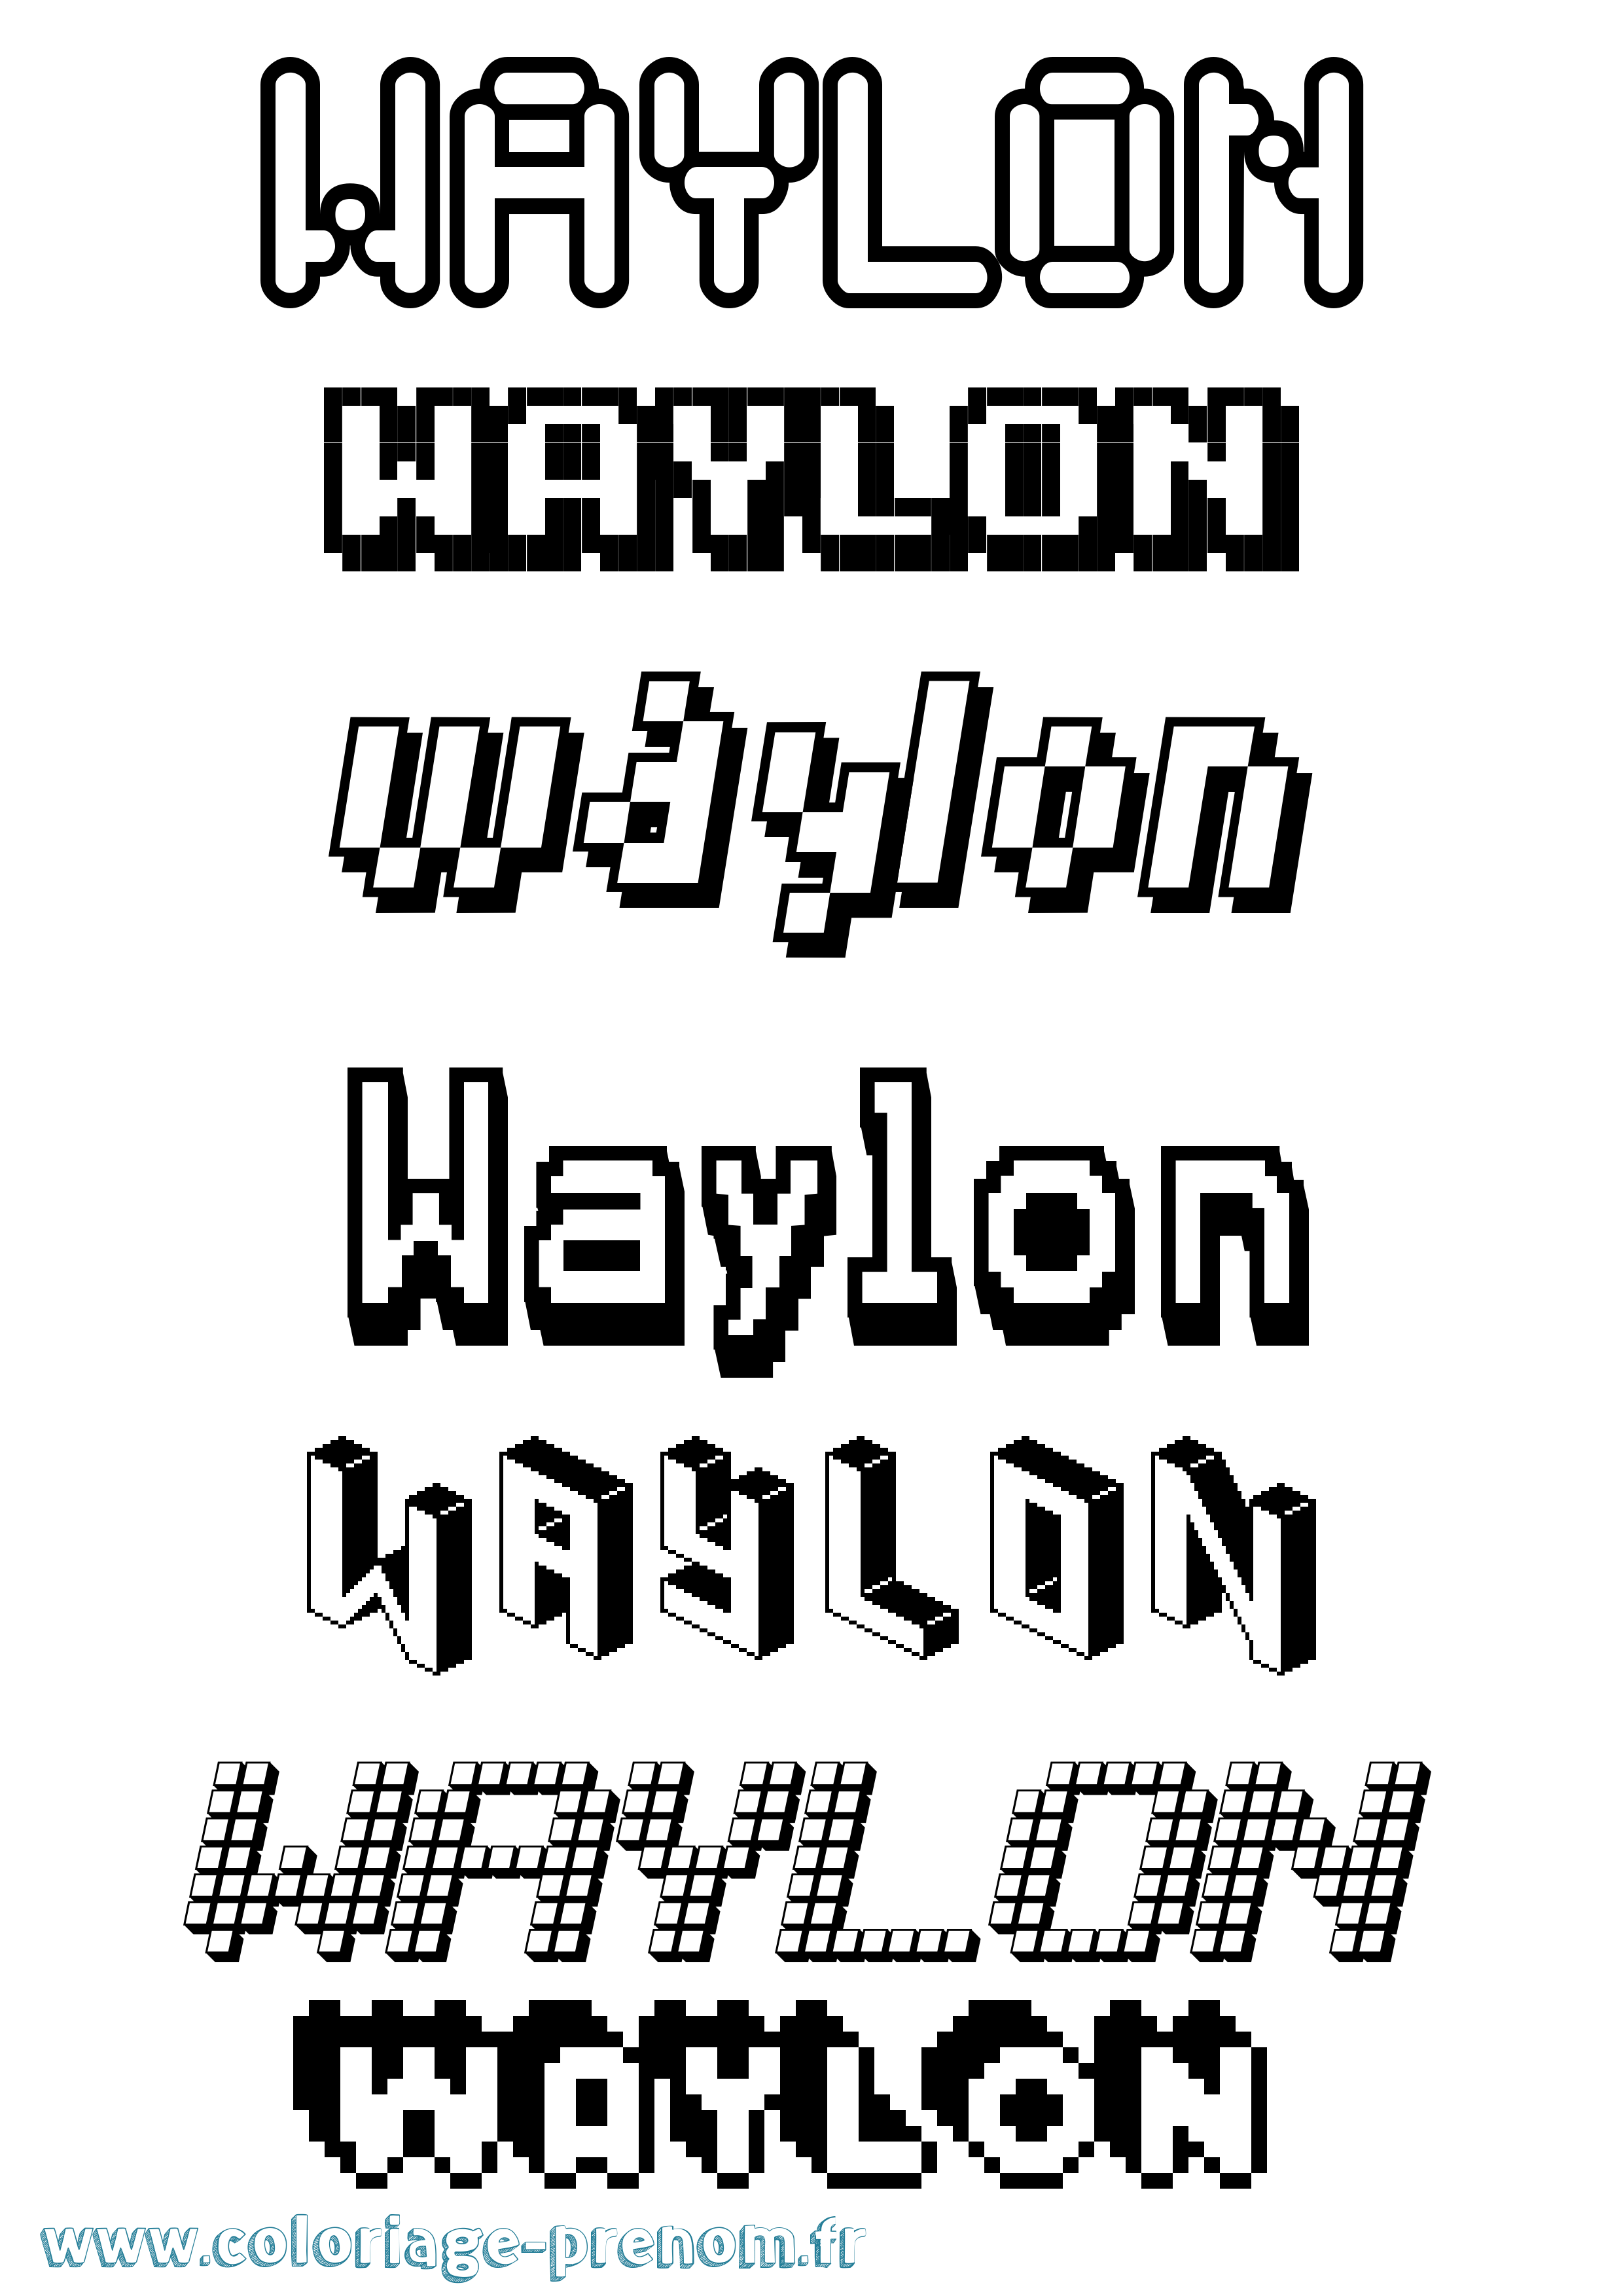 Coloriage prénom Waylon Pixel